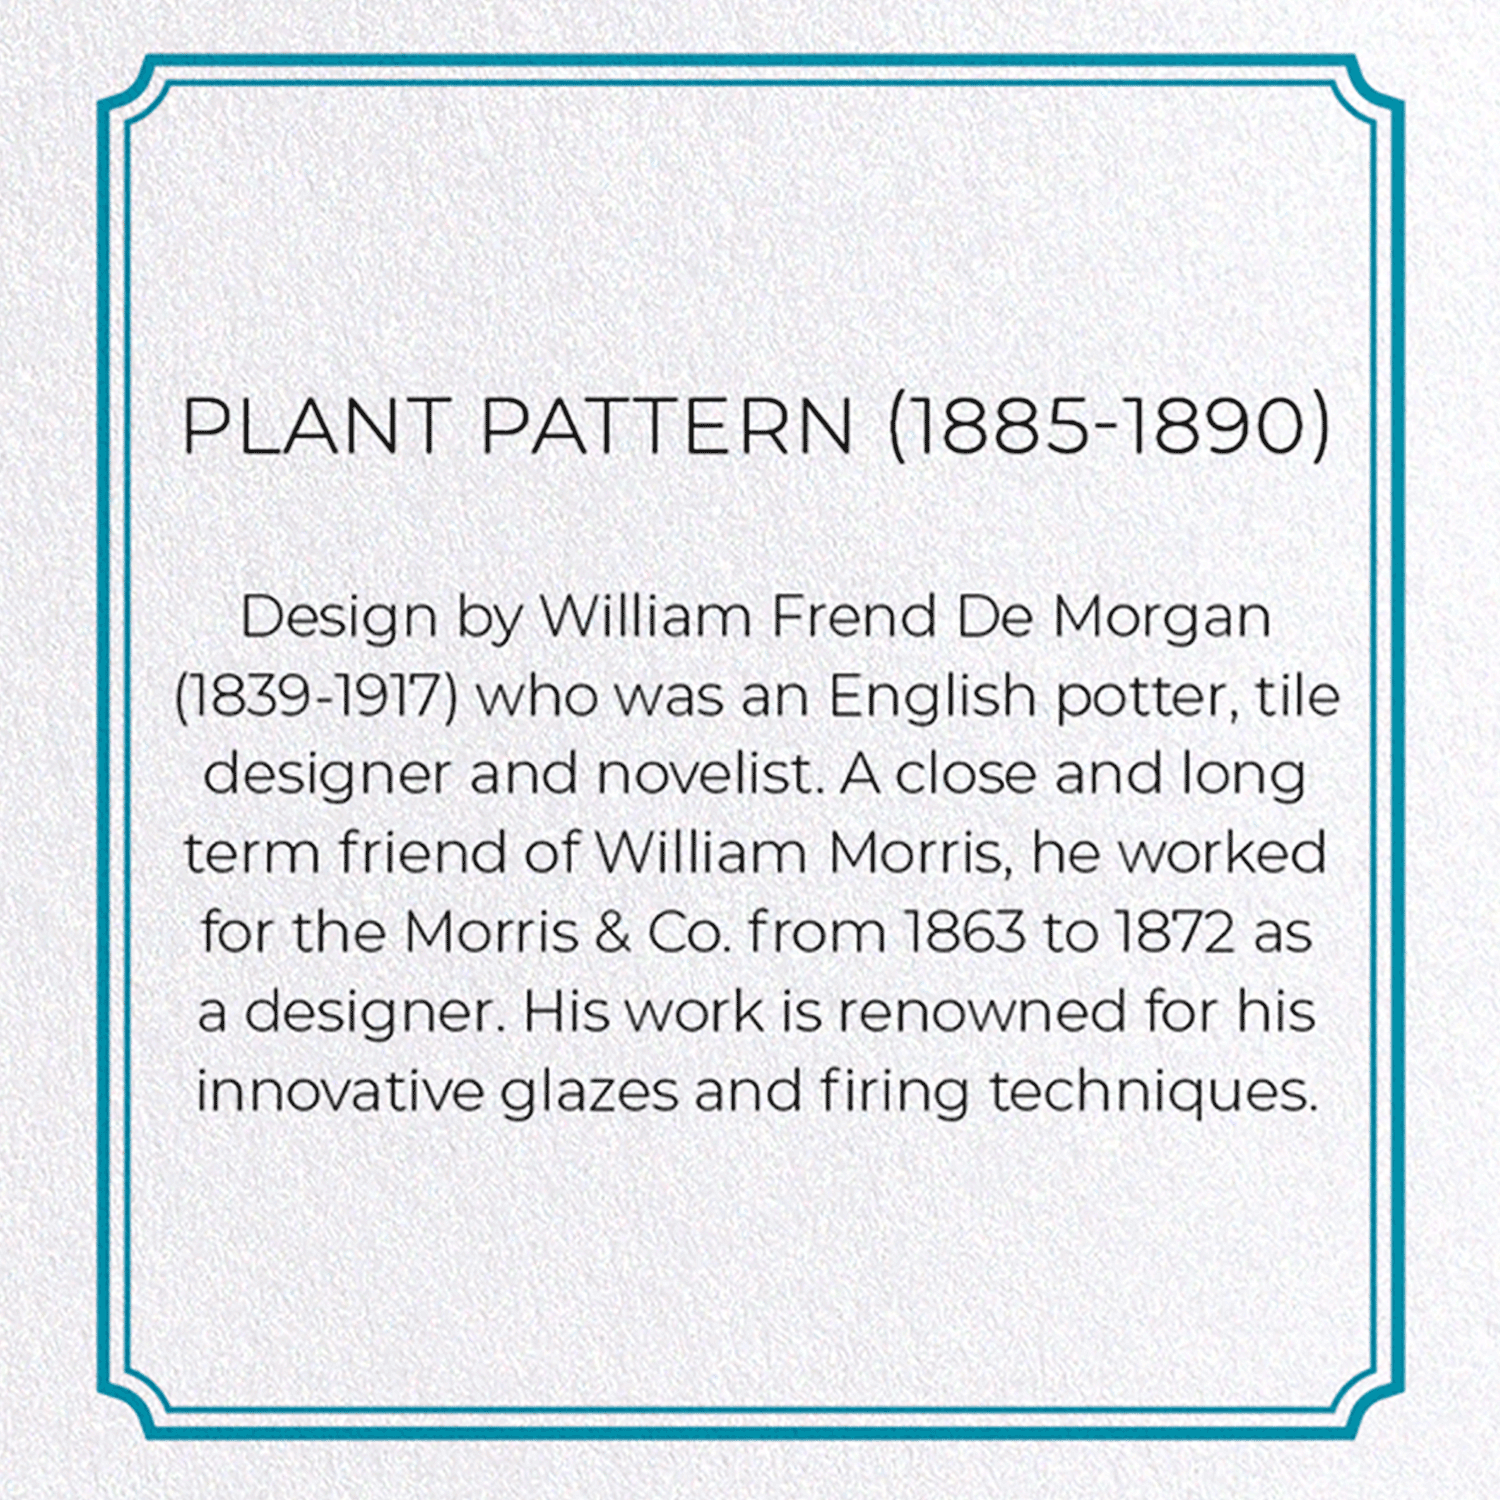 PLANT PATTERN (1885-1890)